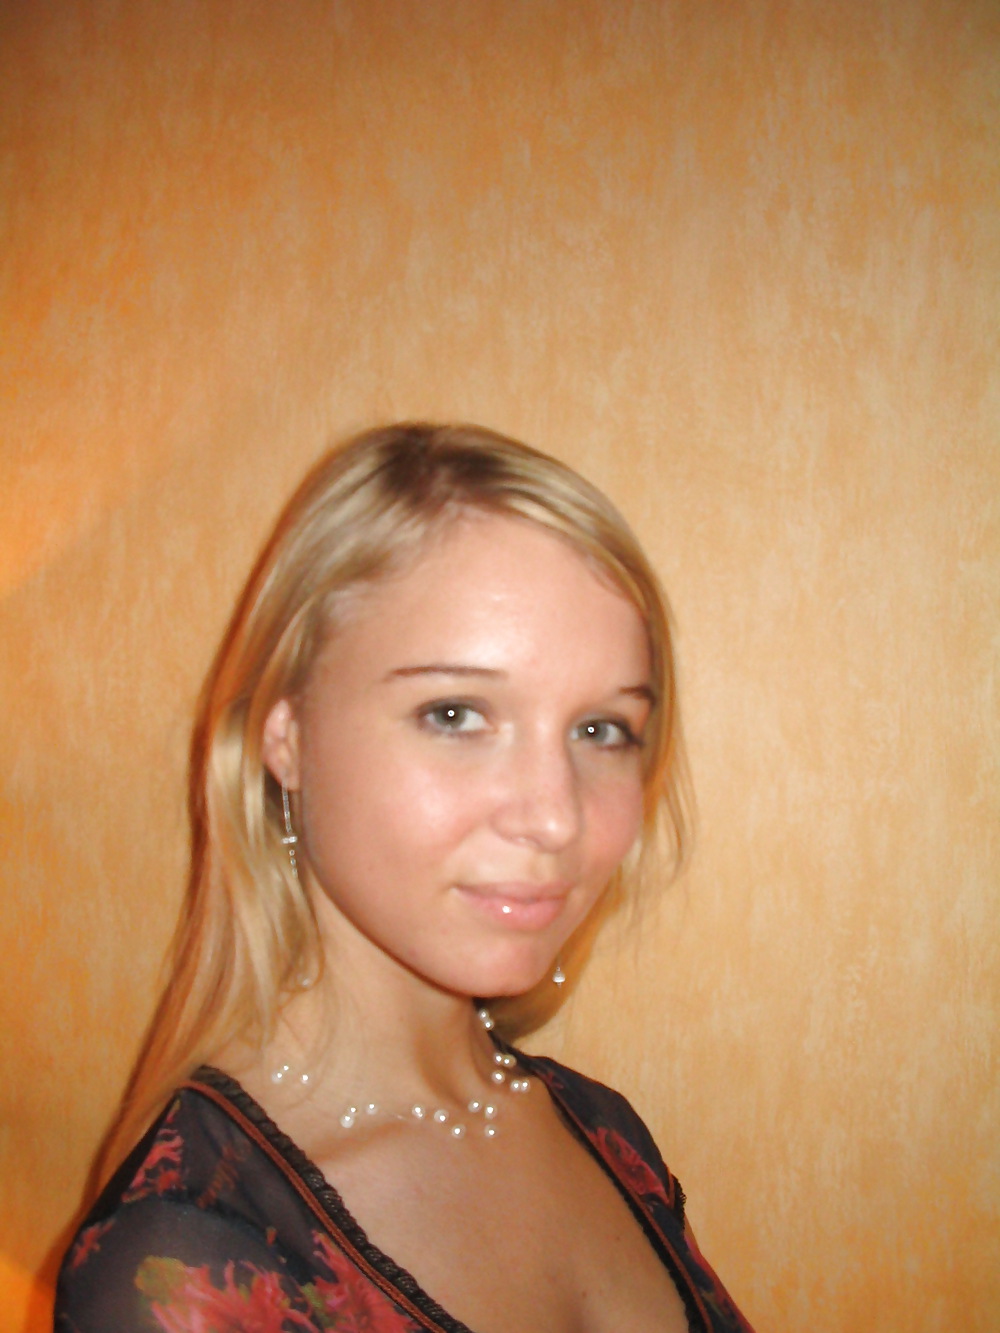 Hot ex ragazza russa teenager
 #7484985